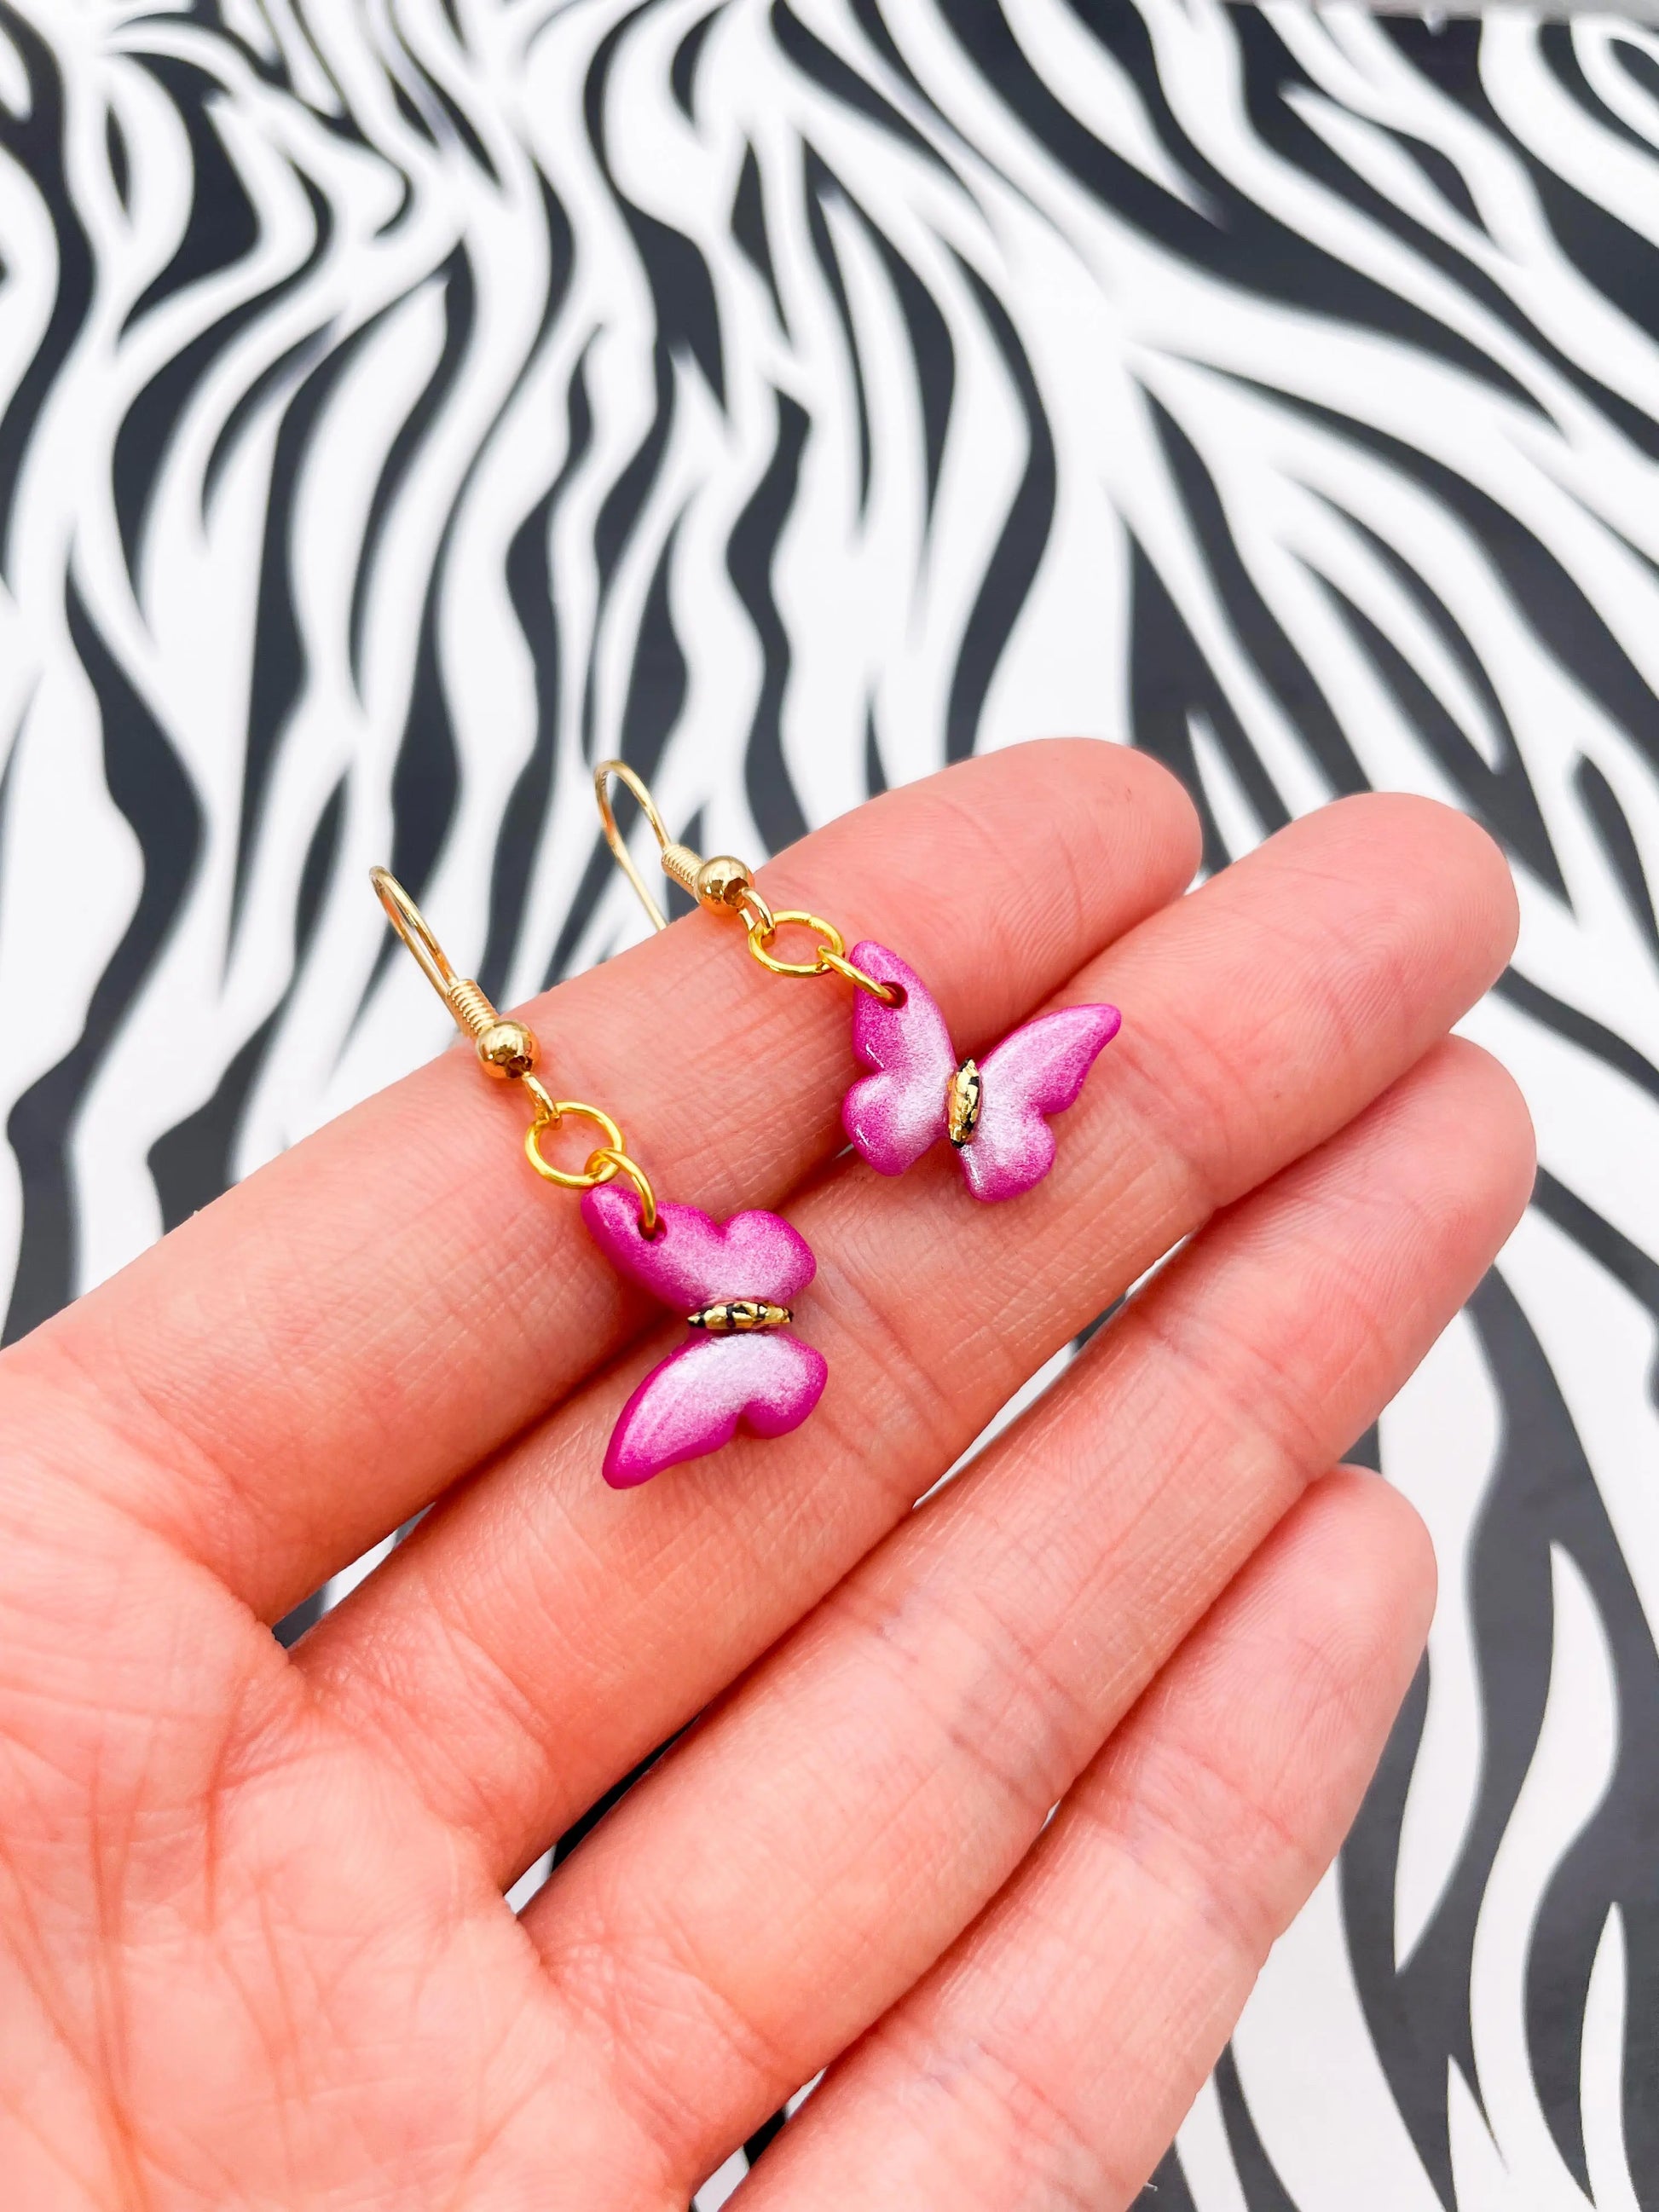 Mini Metallic Hot Pink Shimmery Butterfly Stud Earrings from Sapphire Frills